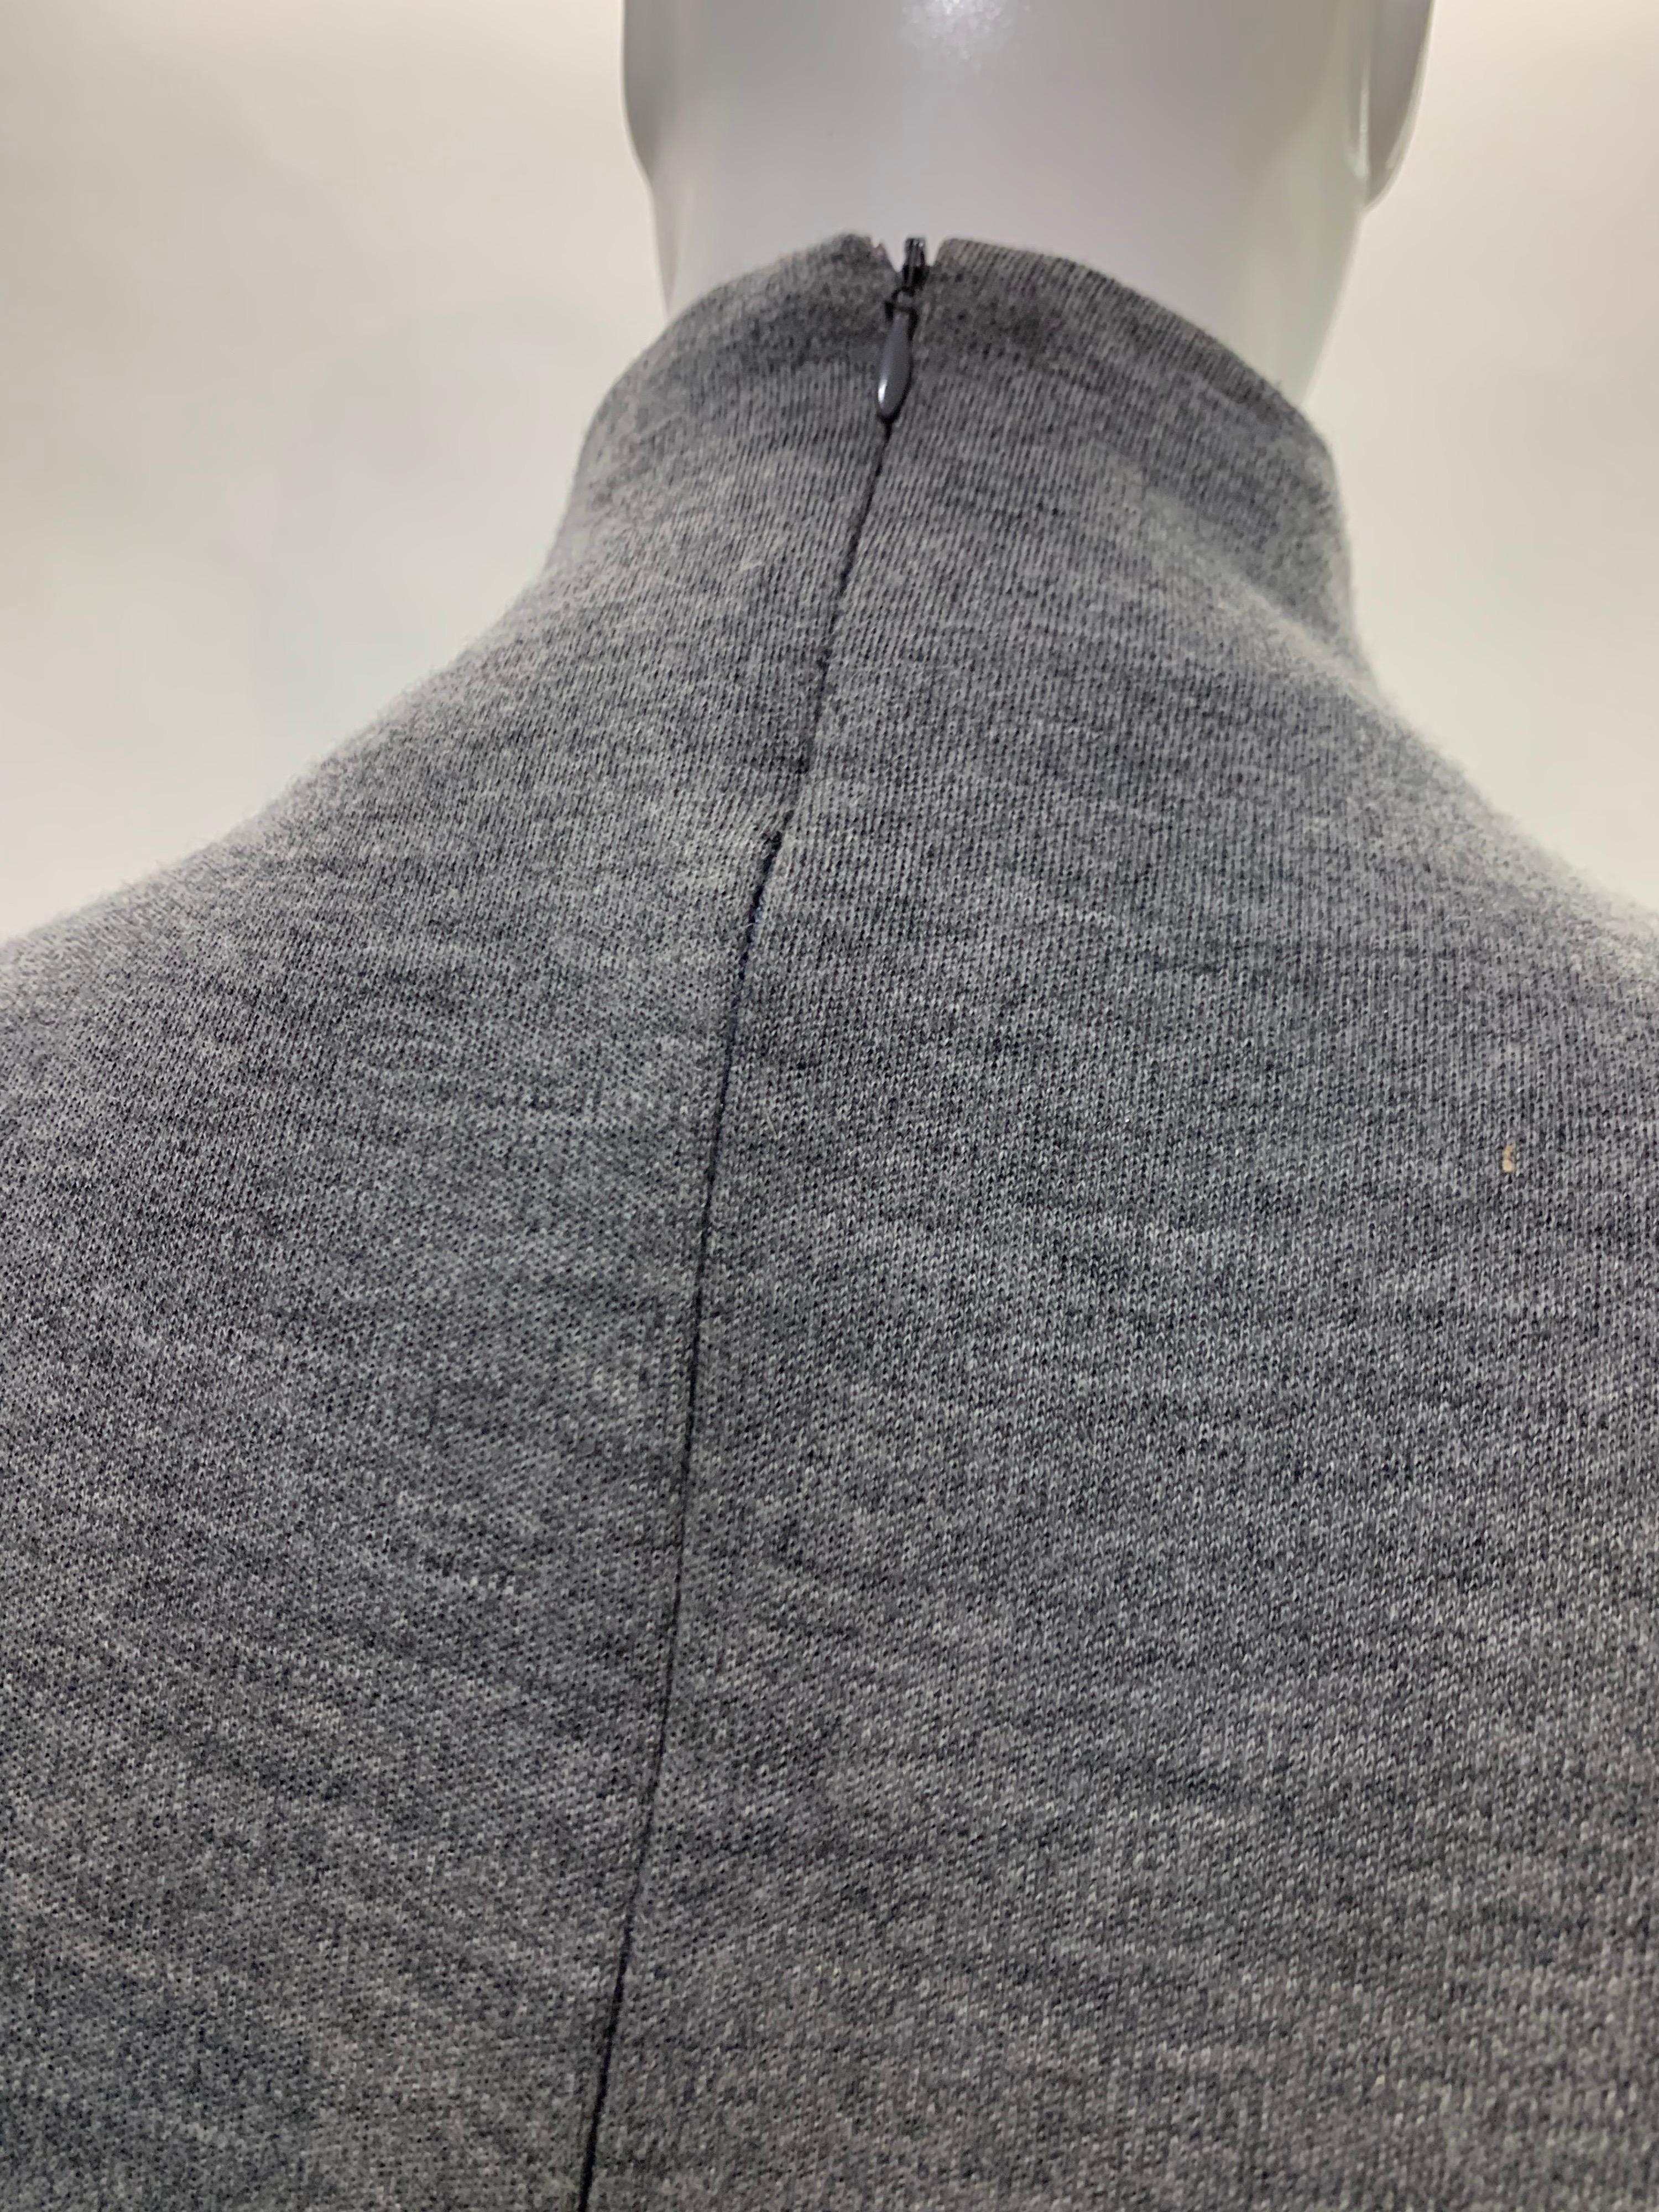 1990 Couture Grey Italian Wool Sweater & Teal Taffeta Train Formal Skirt Set For Sale 6